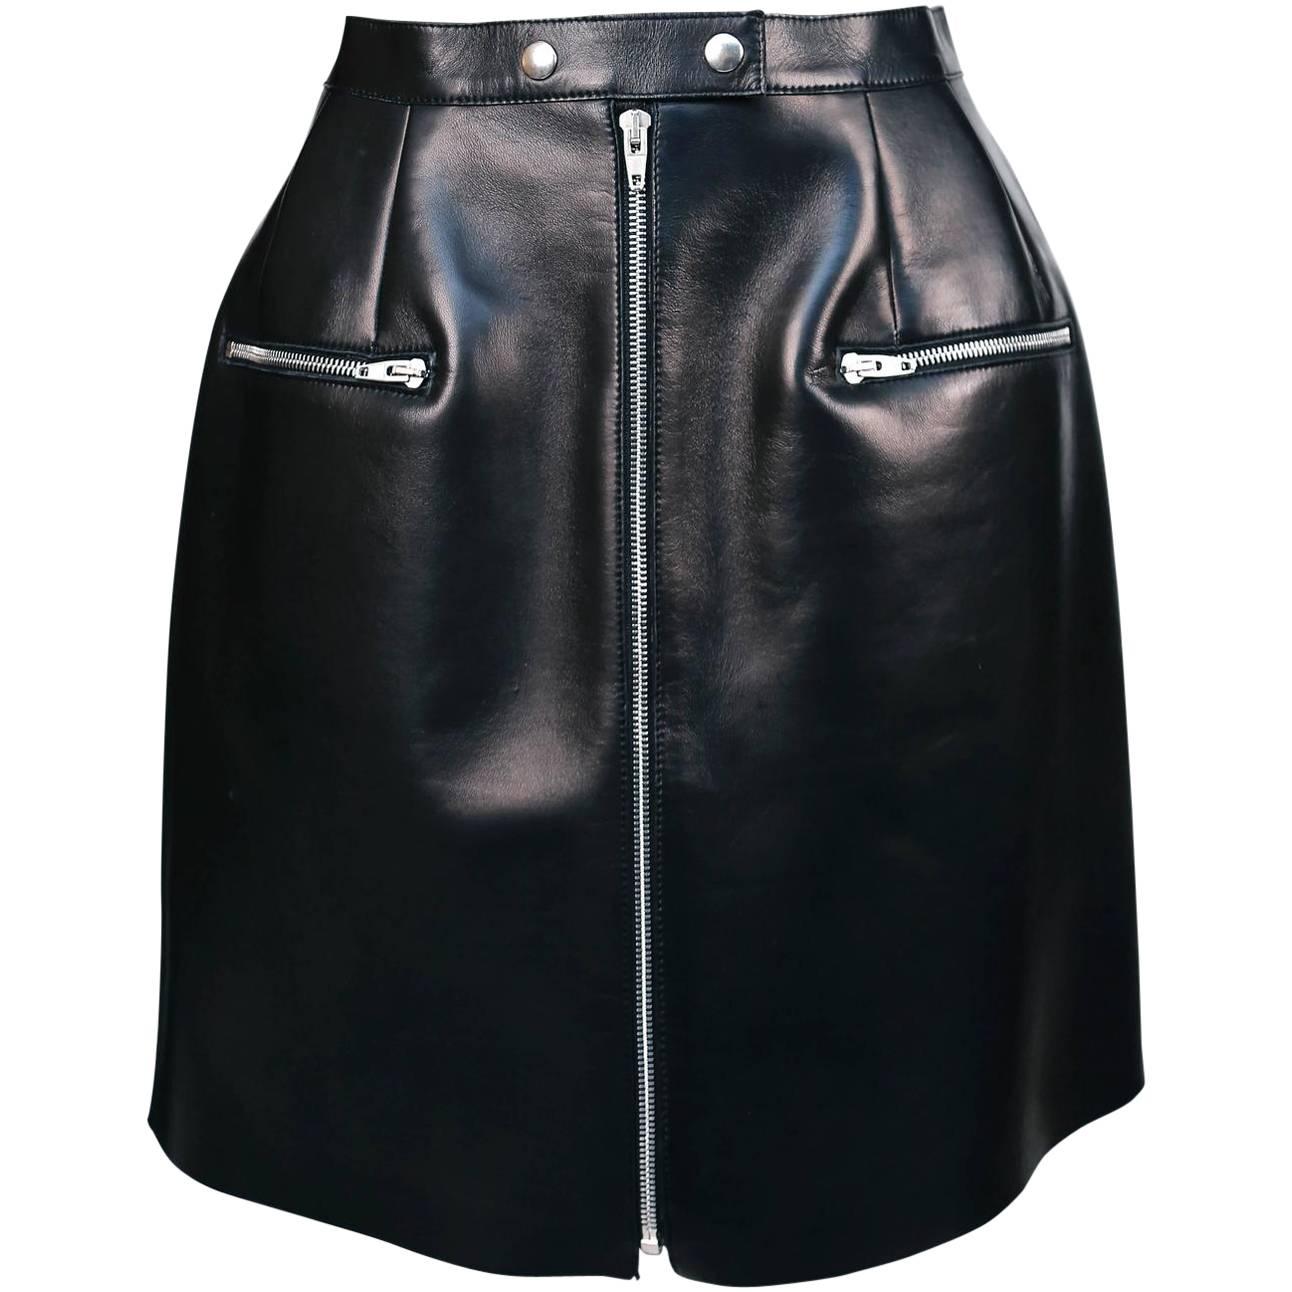 unworn CELINE black leather skirt with sliver zipper